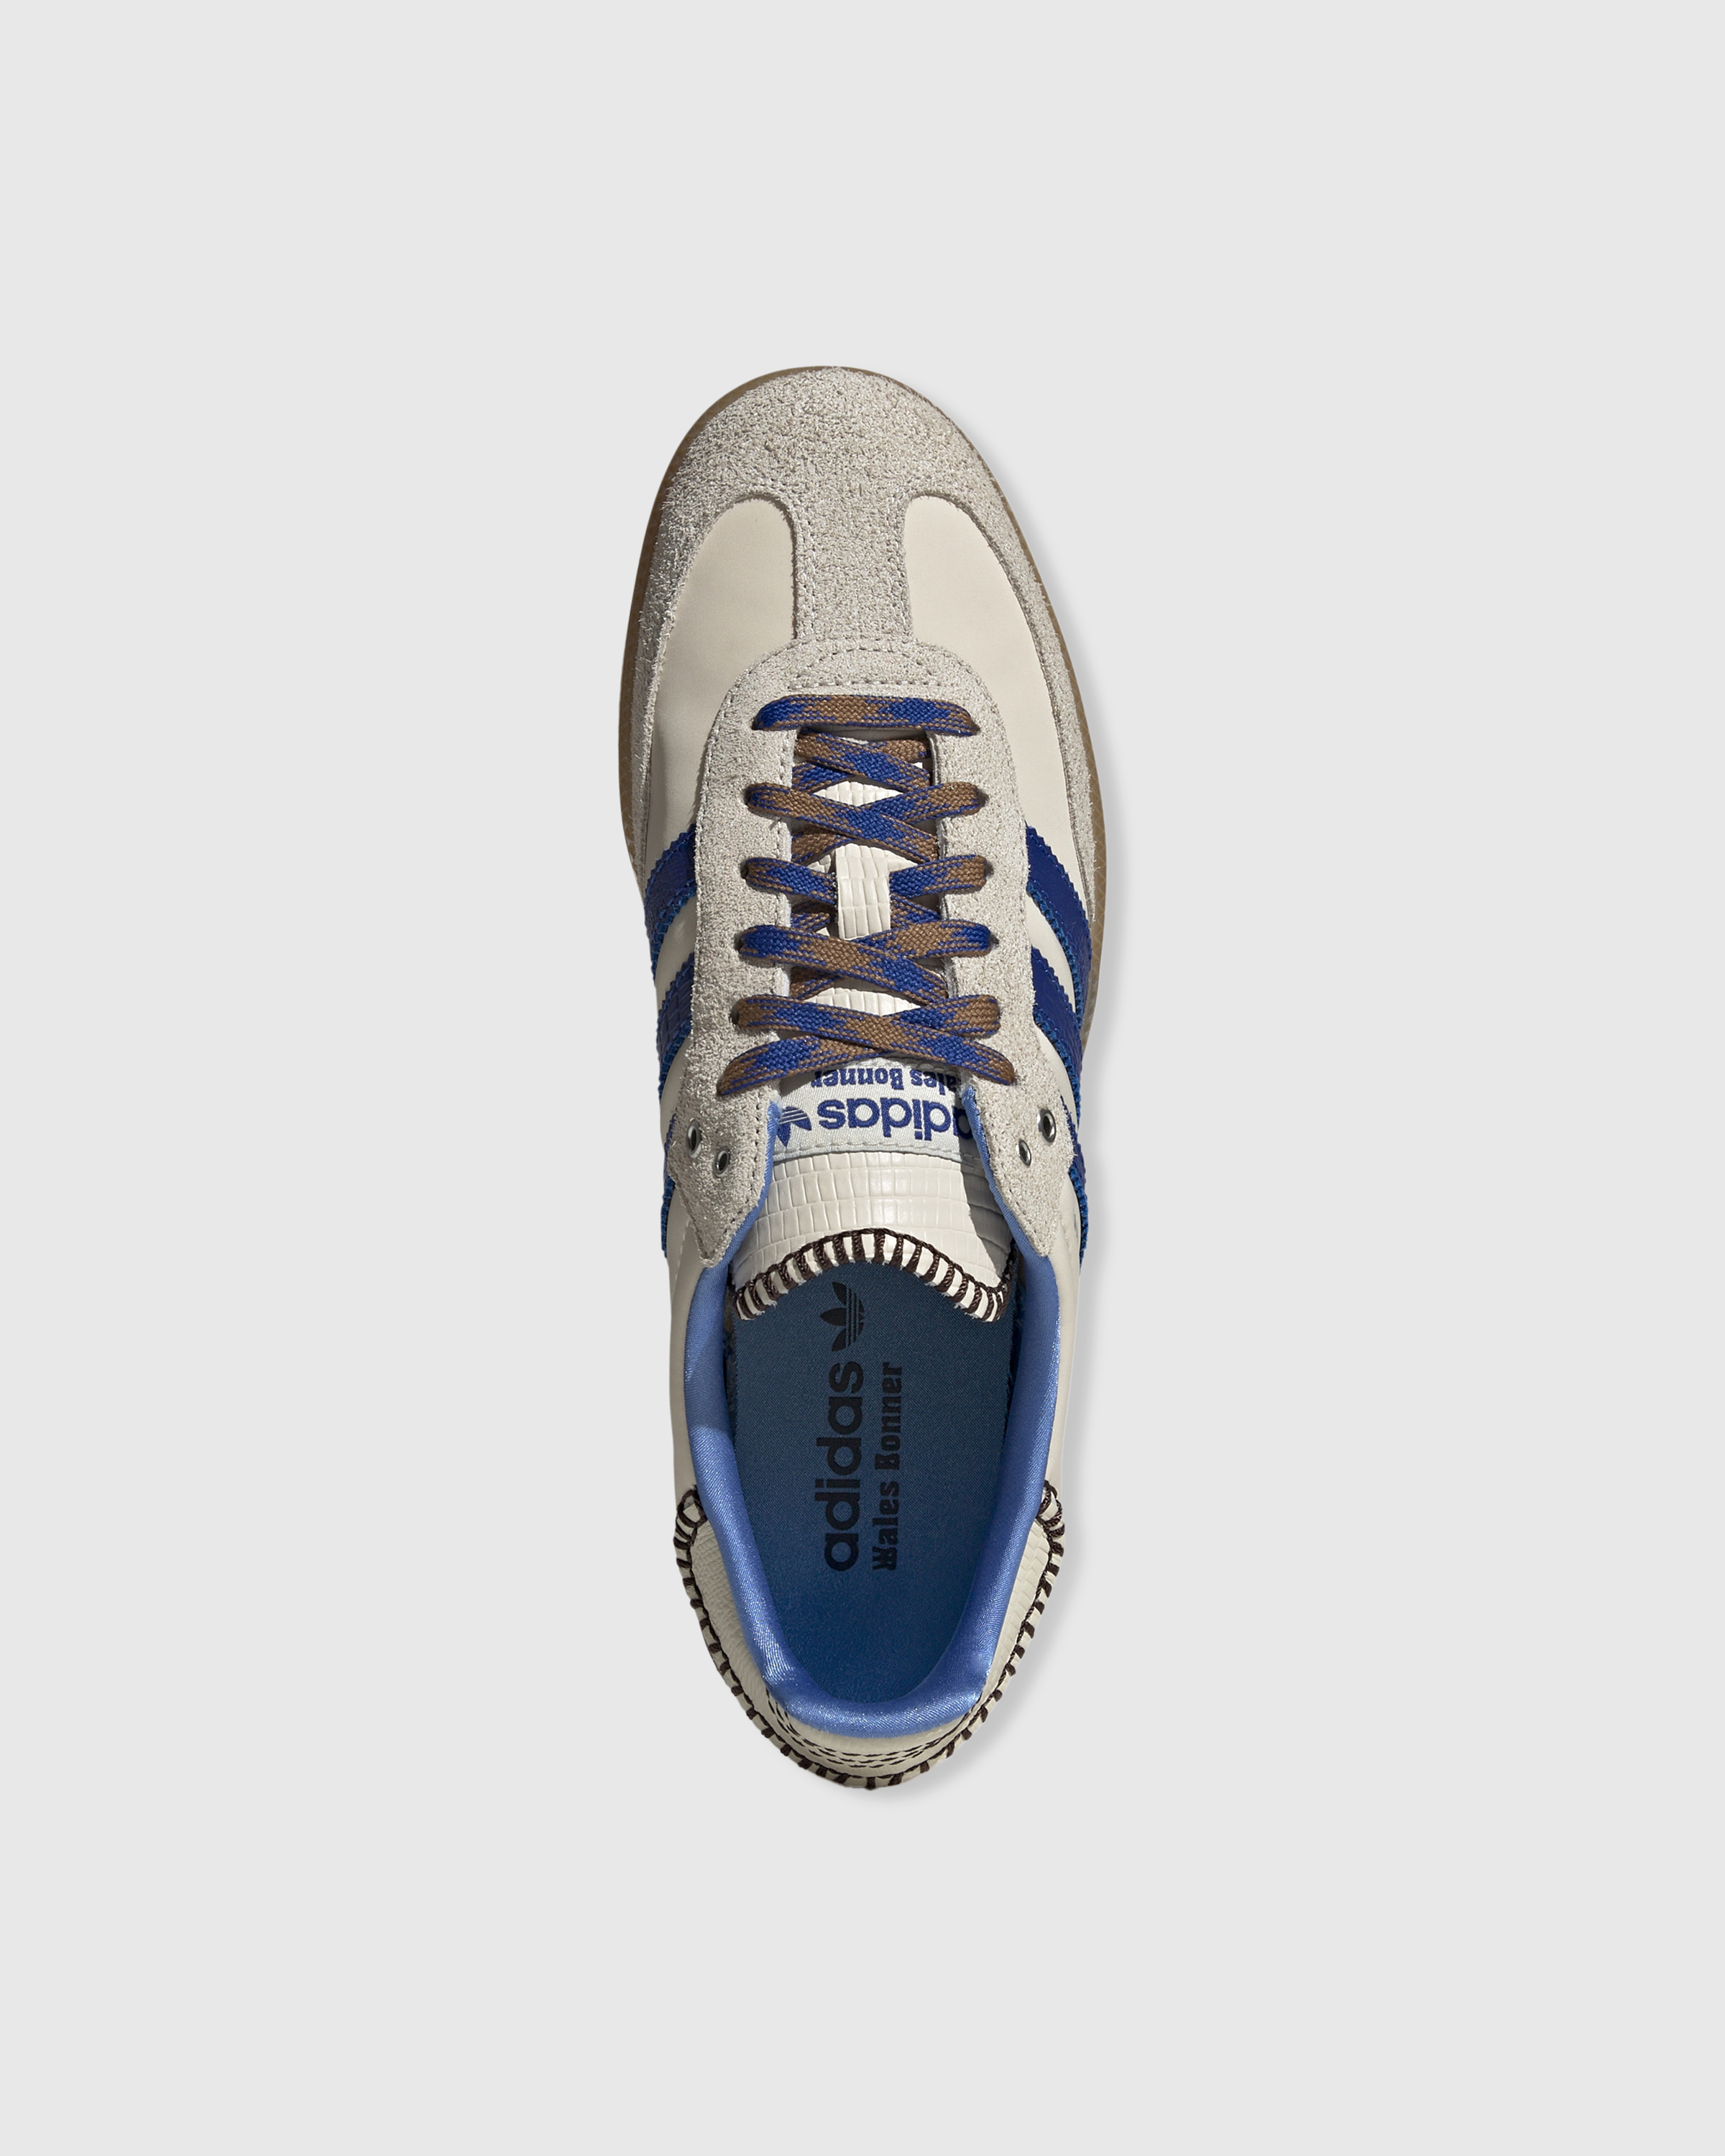 Adidas x Wales Bonner – Samba Cream/Blue - Low Top Sneakers - Beige - Image 5